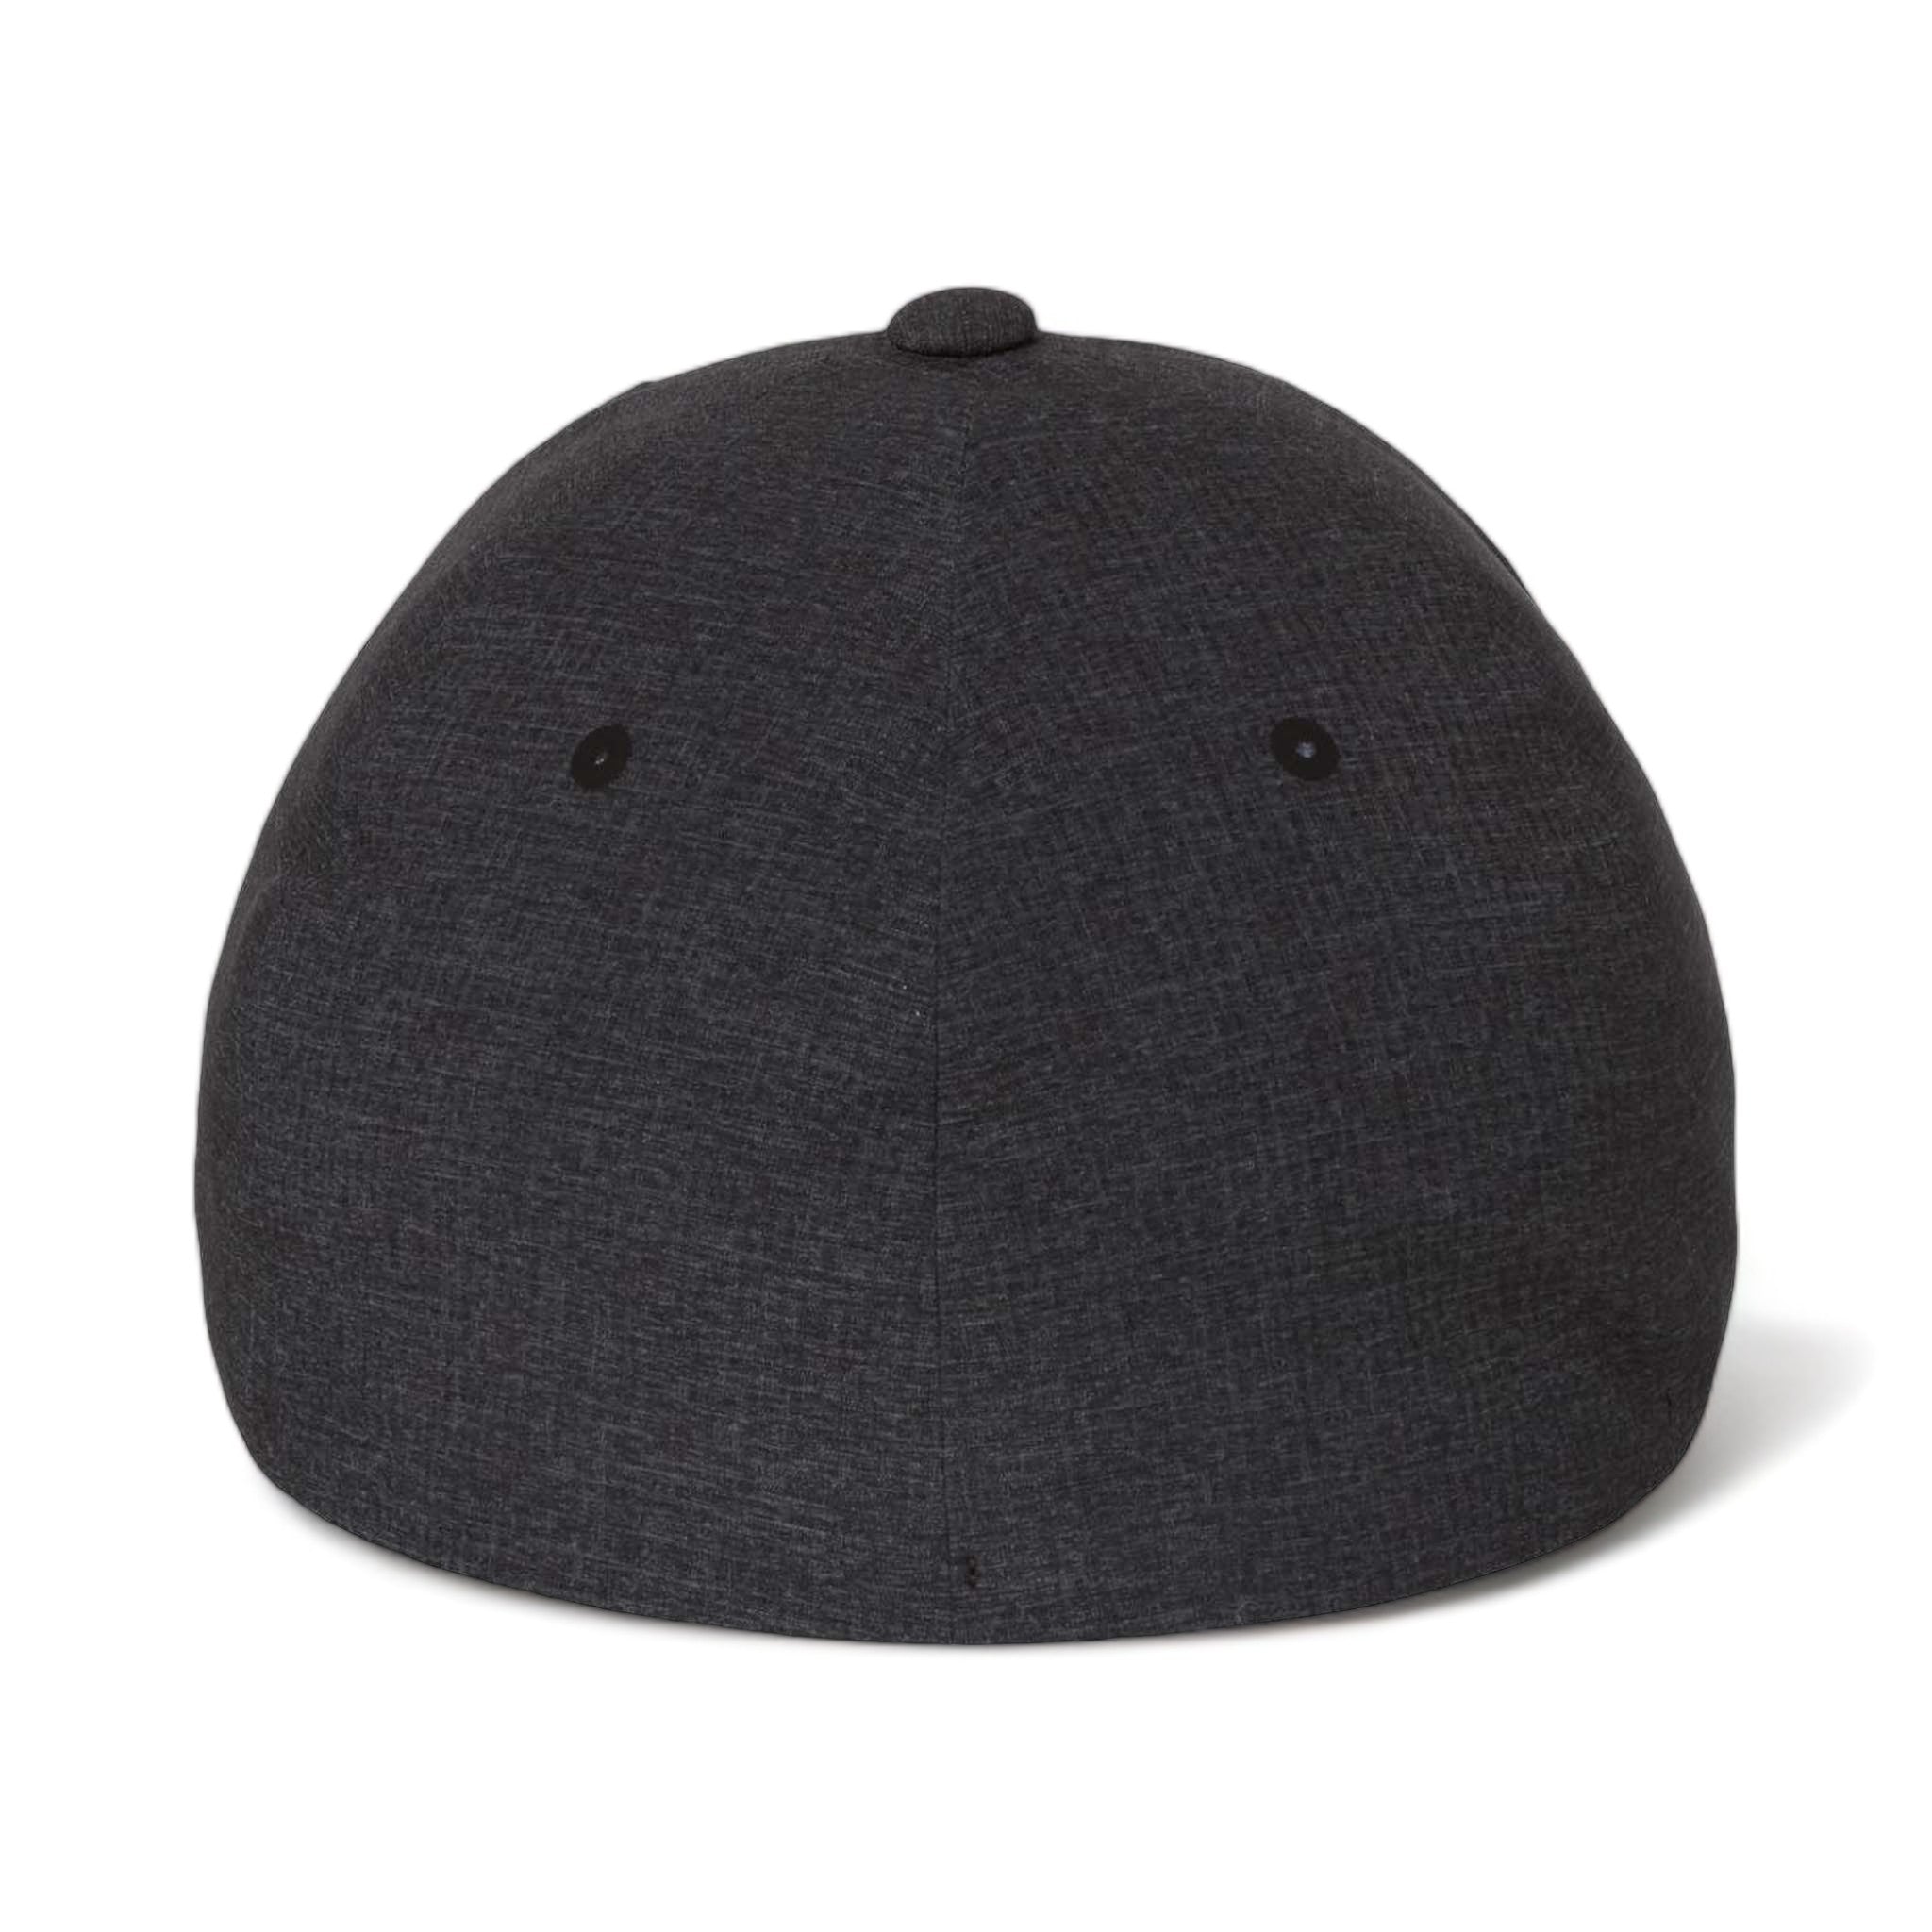 Back view of Flexfit 180 custom hat in mélange blue and mélange charcoal